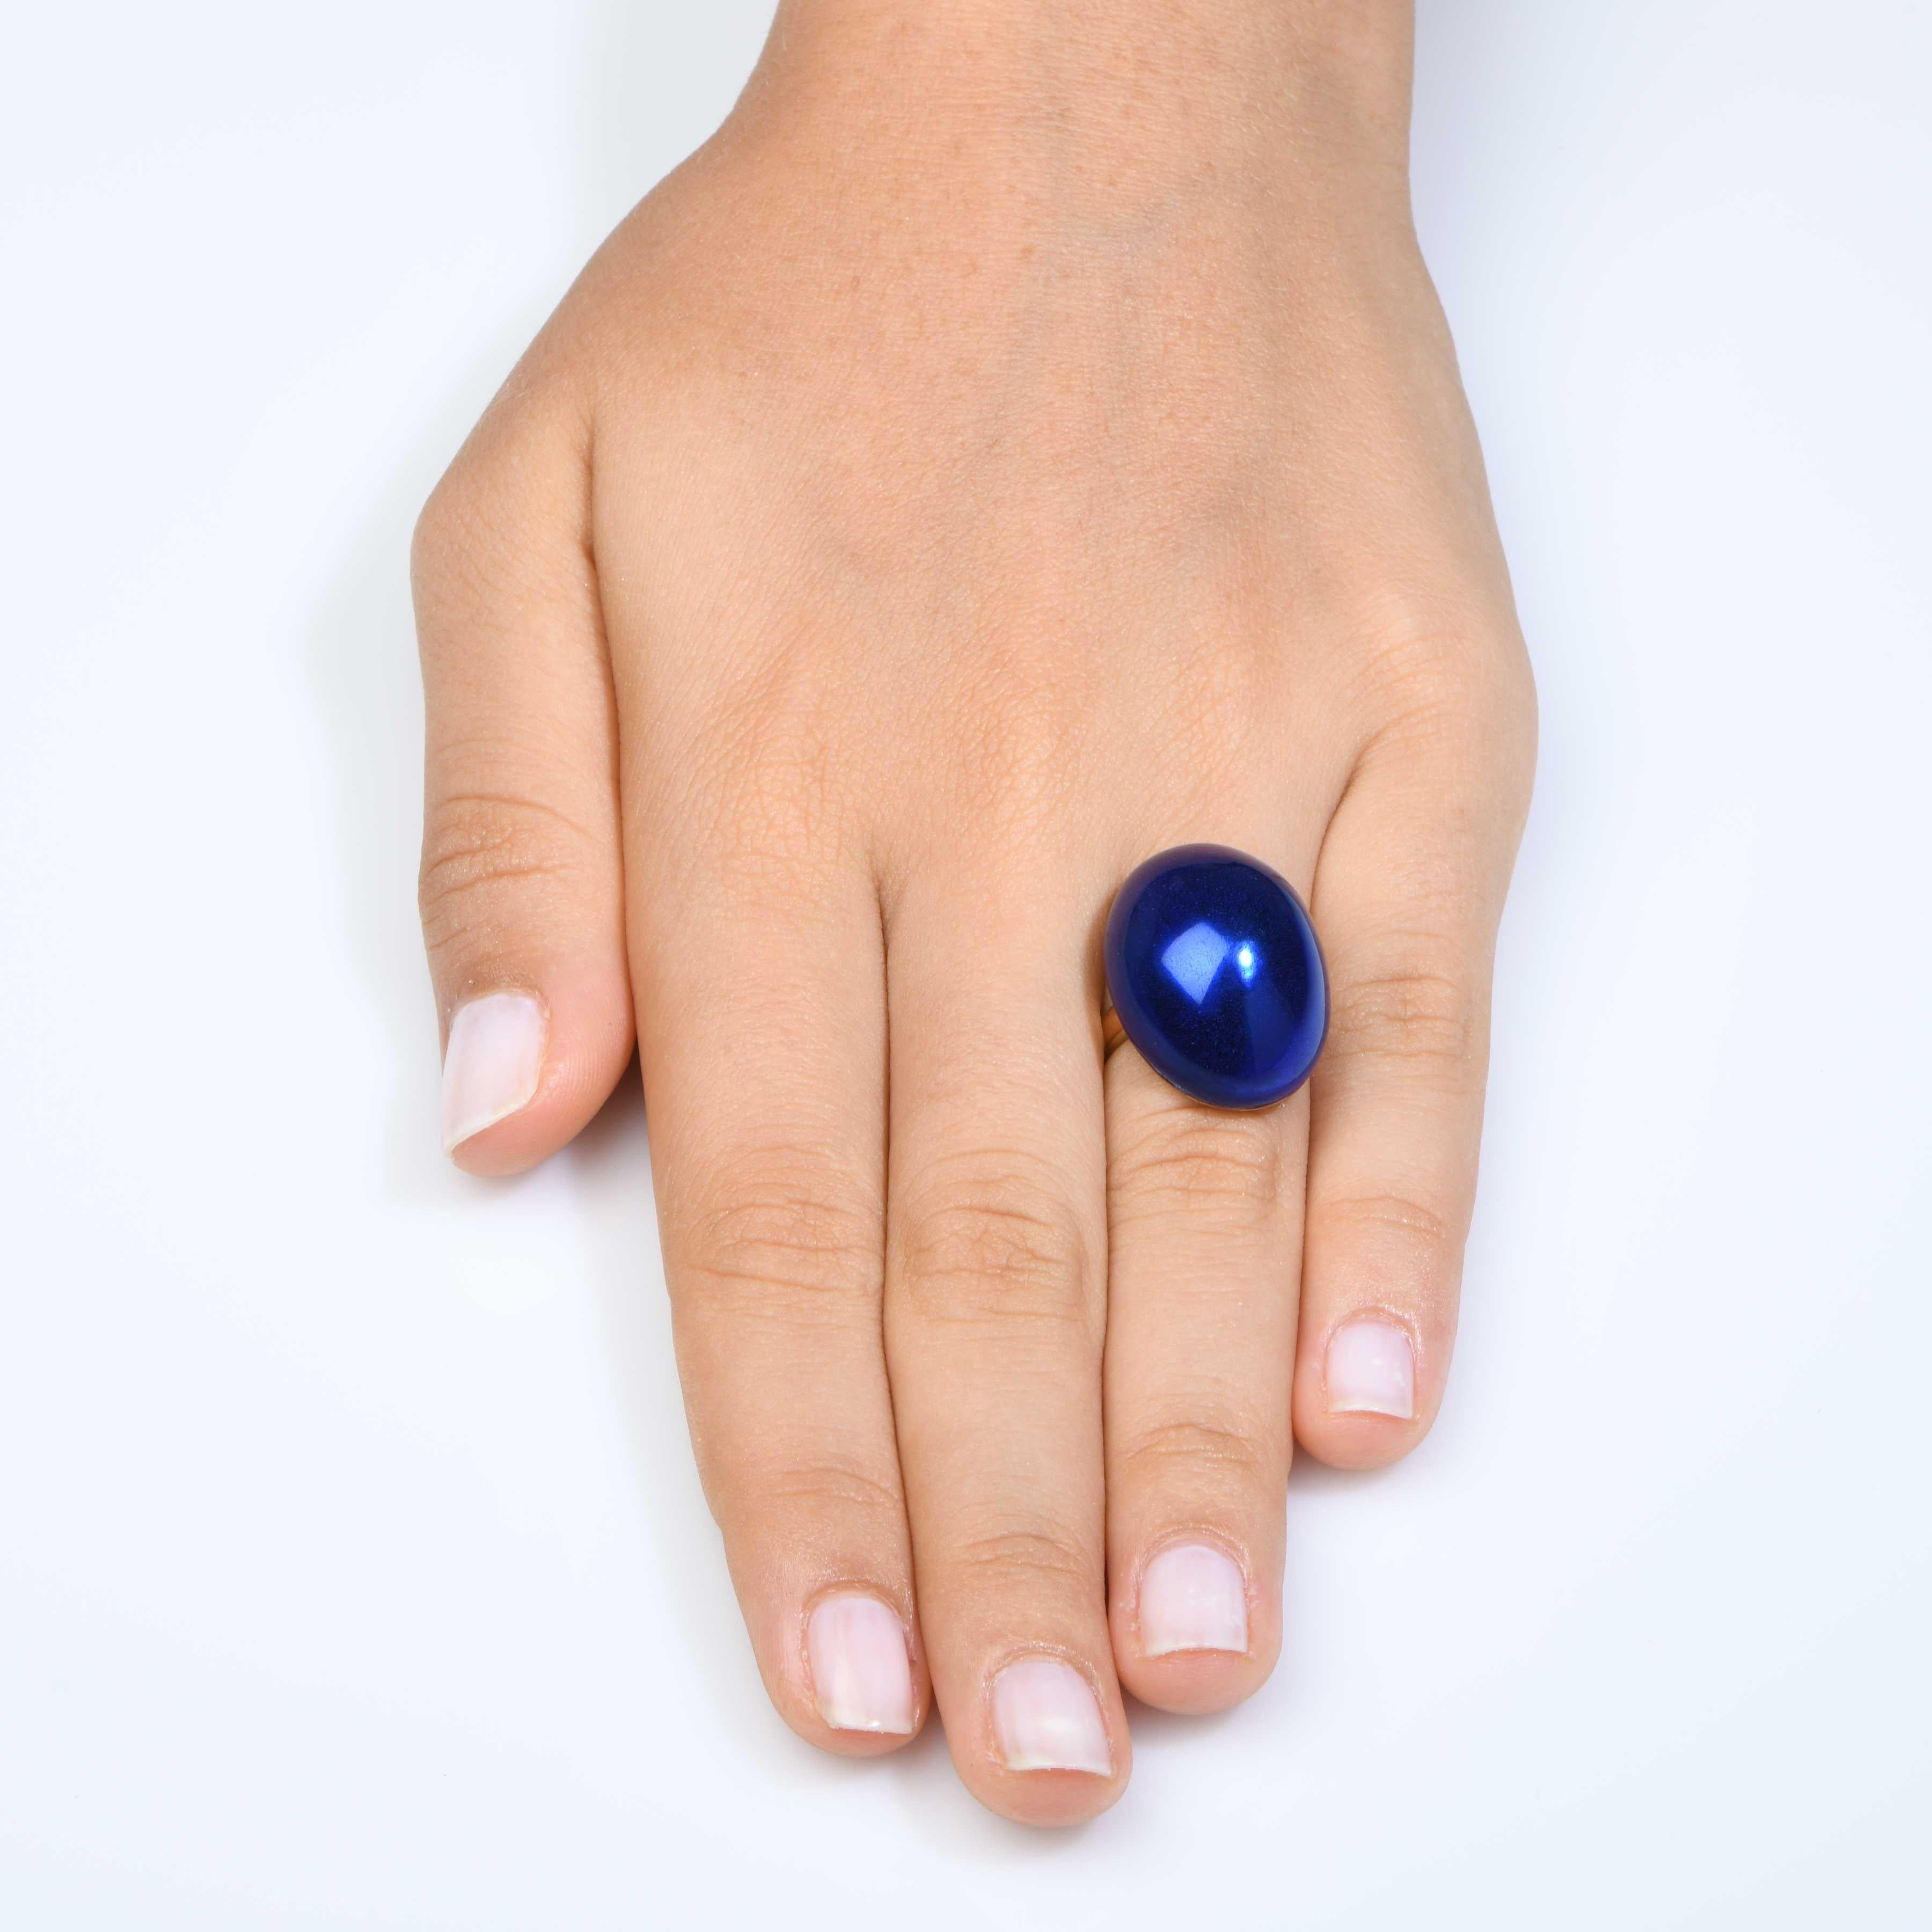 Bombe Ring with blue enamel top by Carvin French in 18 Karat yellow gold.
Ring Size: 6
Metal Type: 18 Karat Yellow Gold
Metal Weight: 11.1 Grams